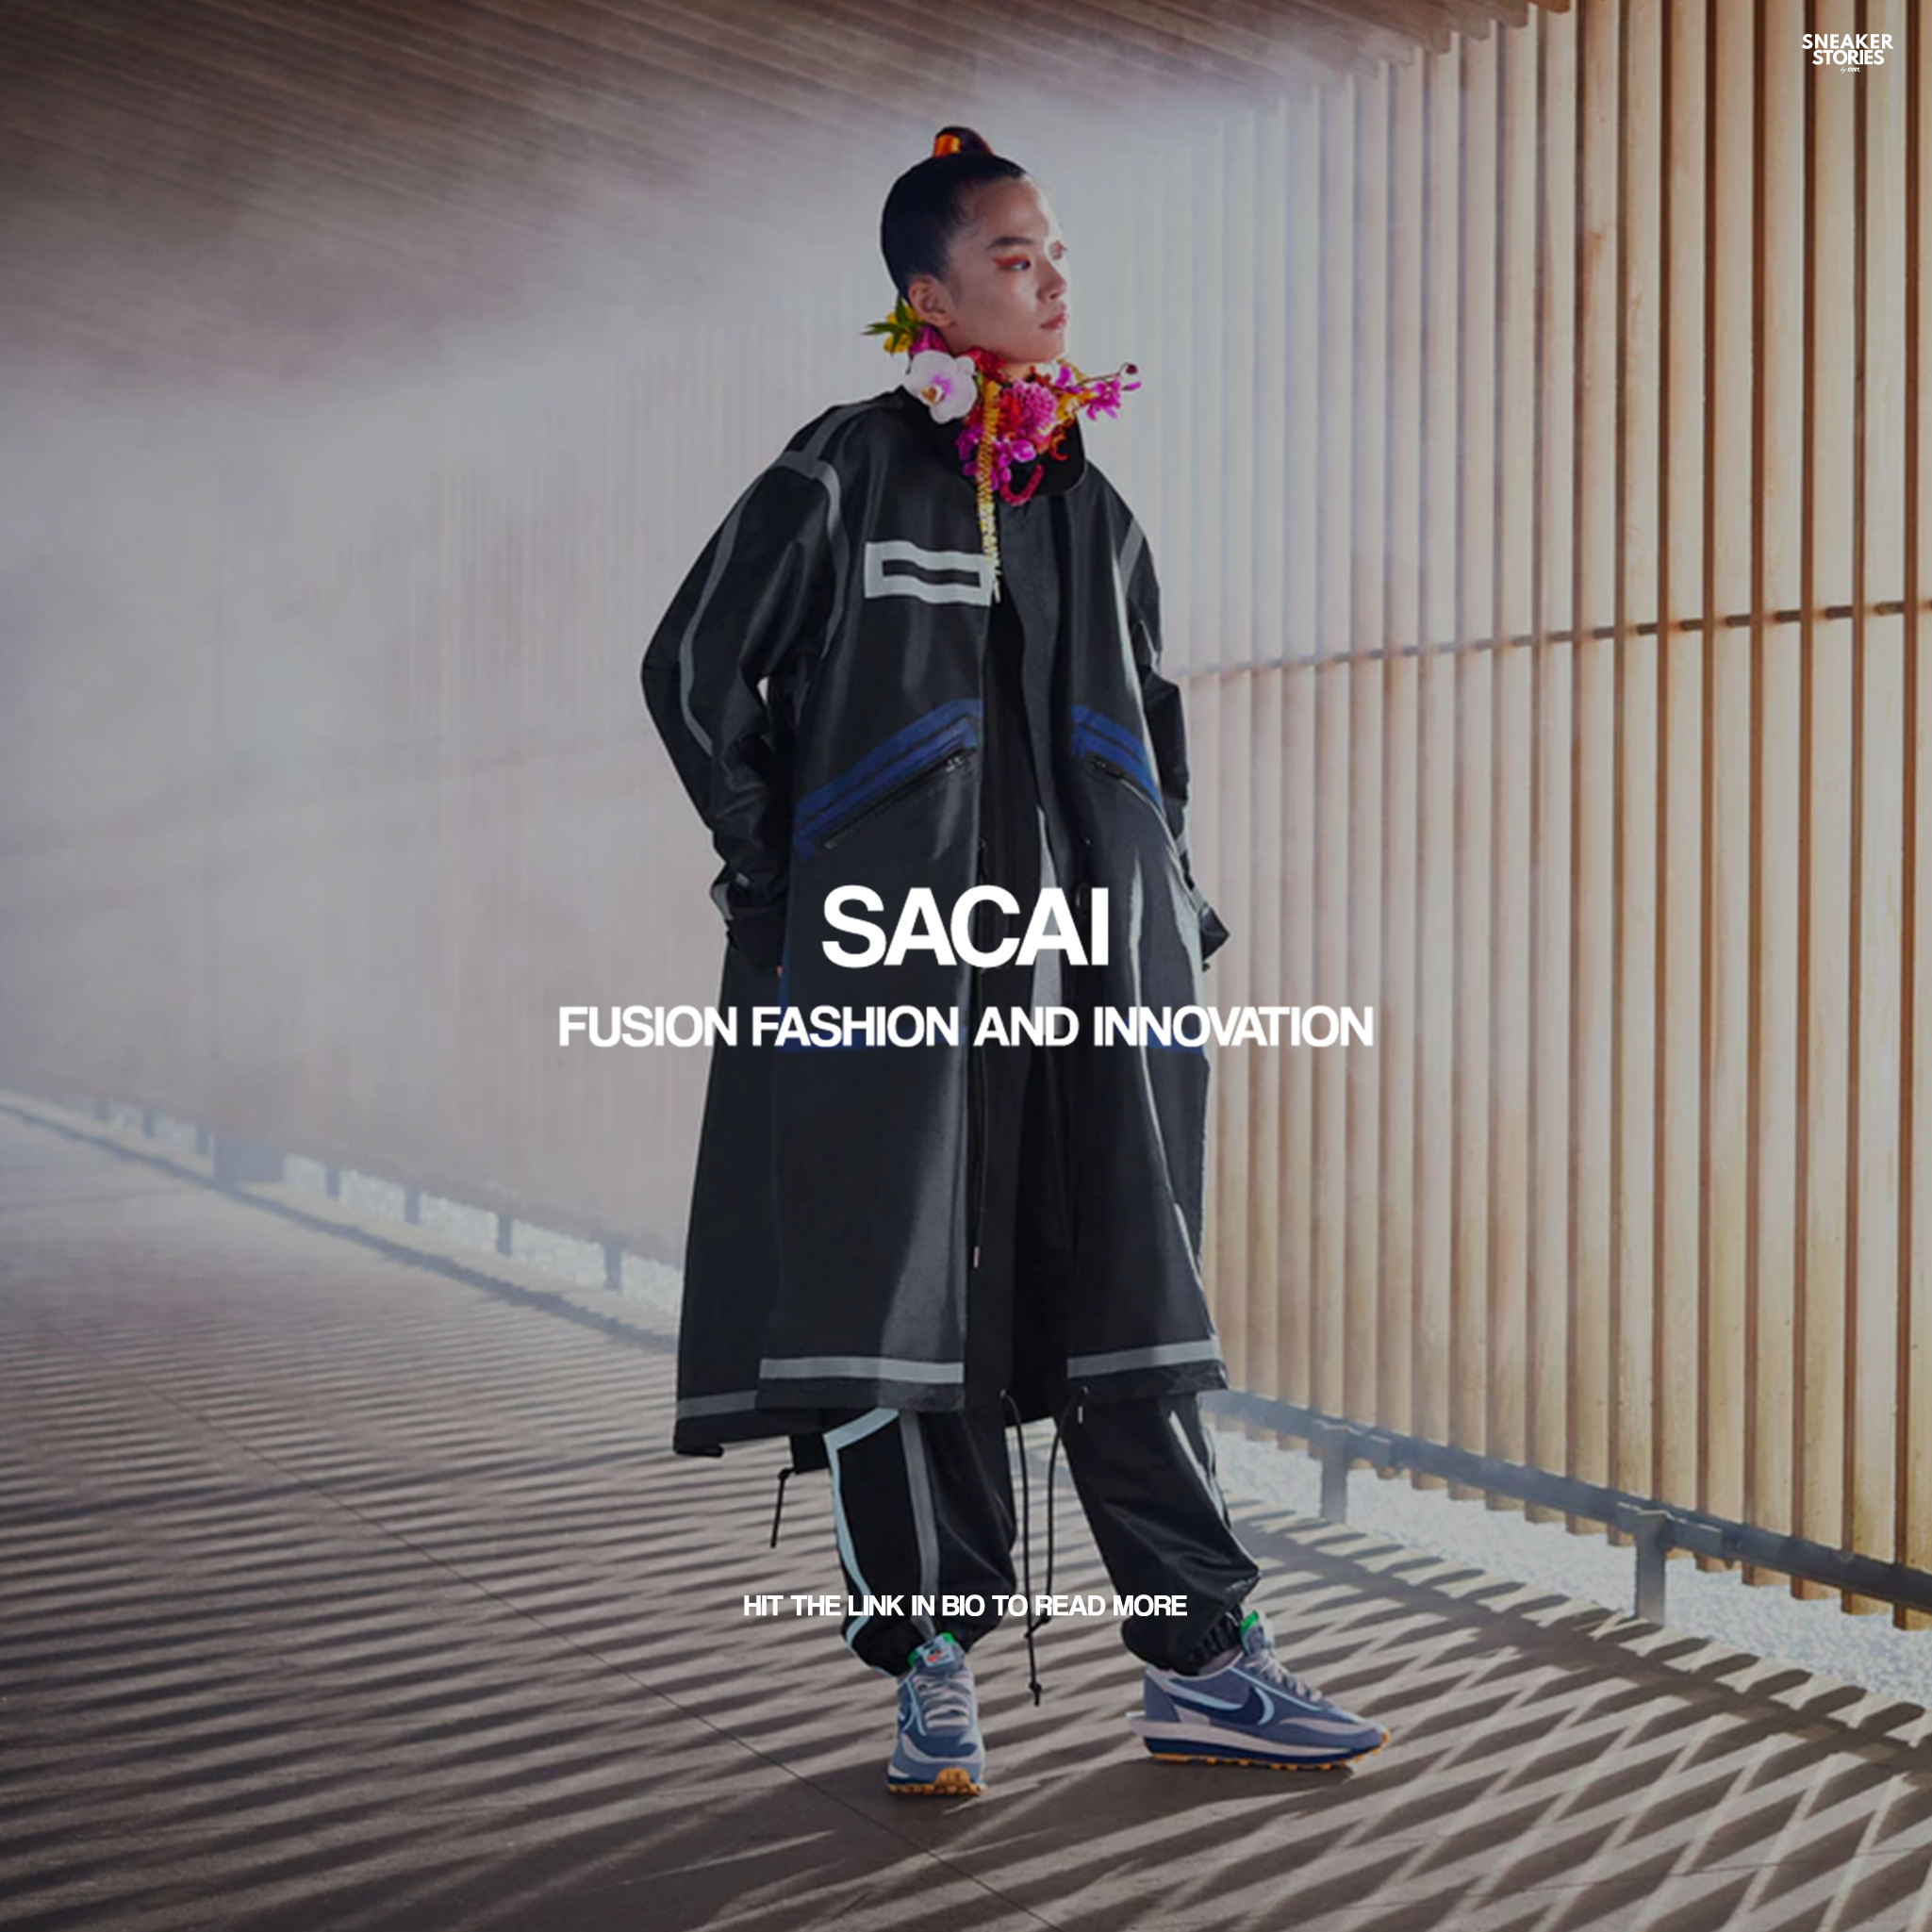 Sacai: Fusion Fashion and Innovation